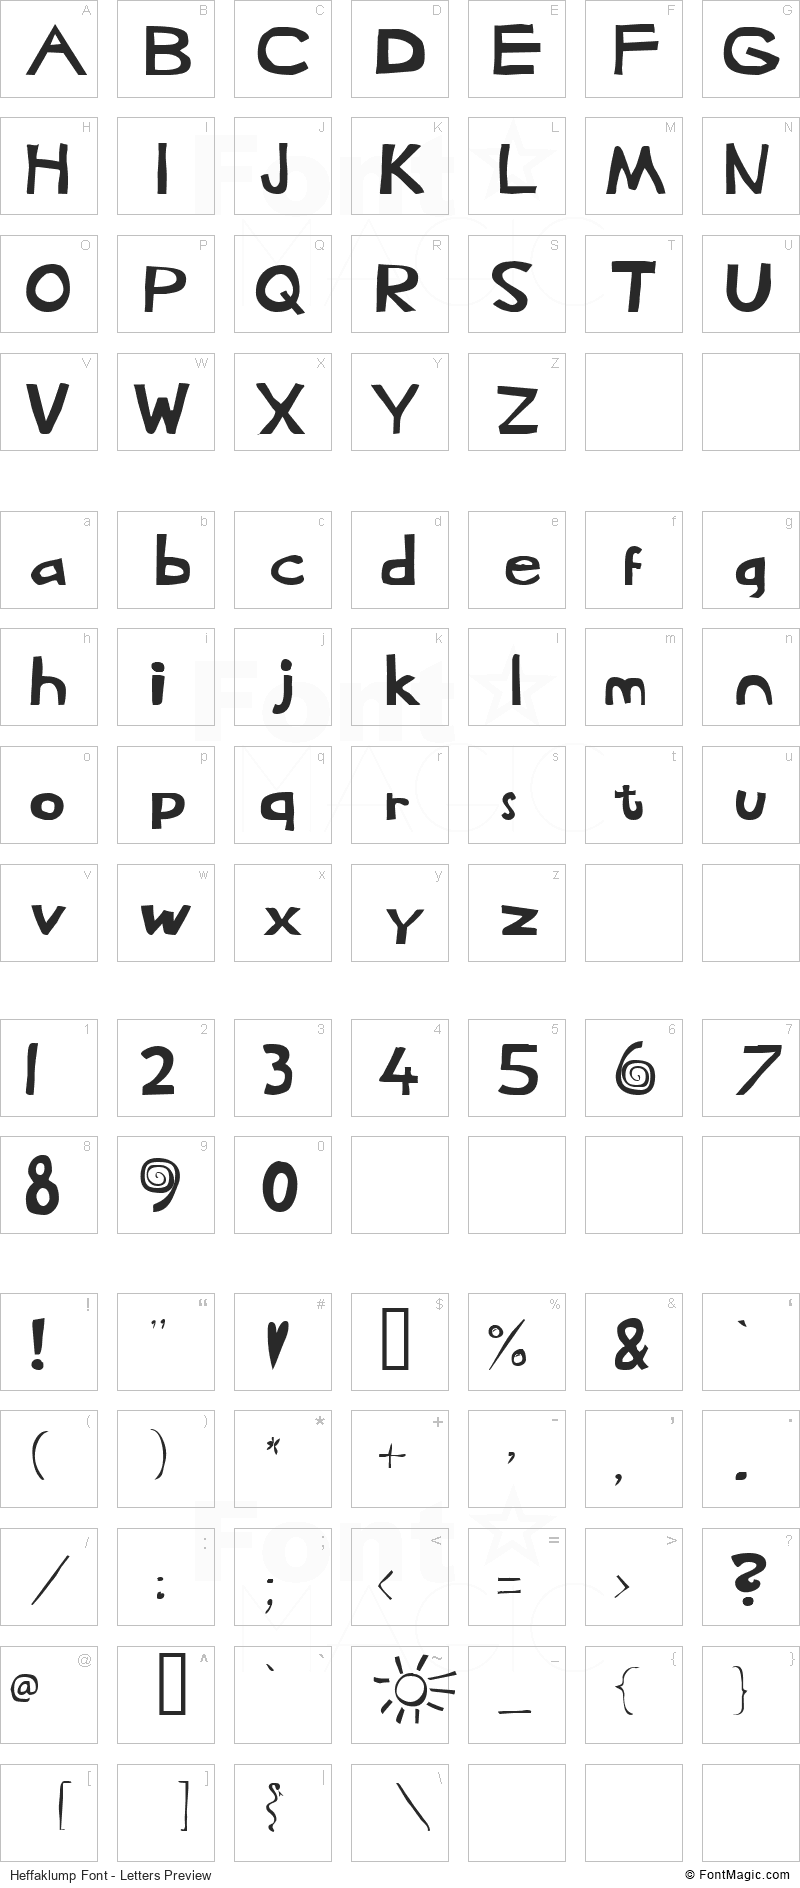 Heffaklump Font - All Latters Preview Chart